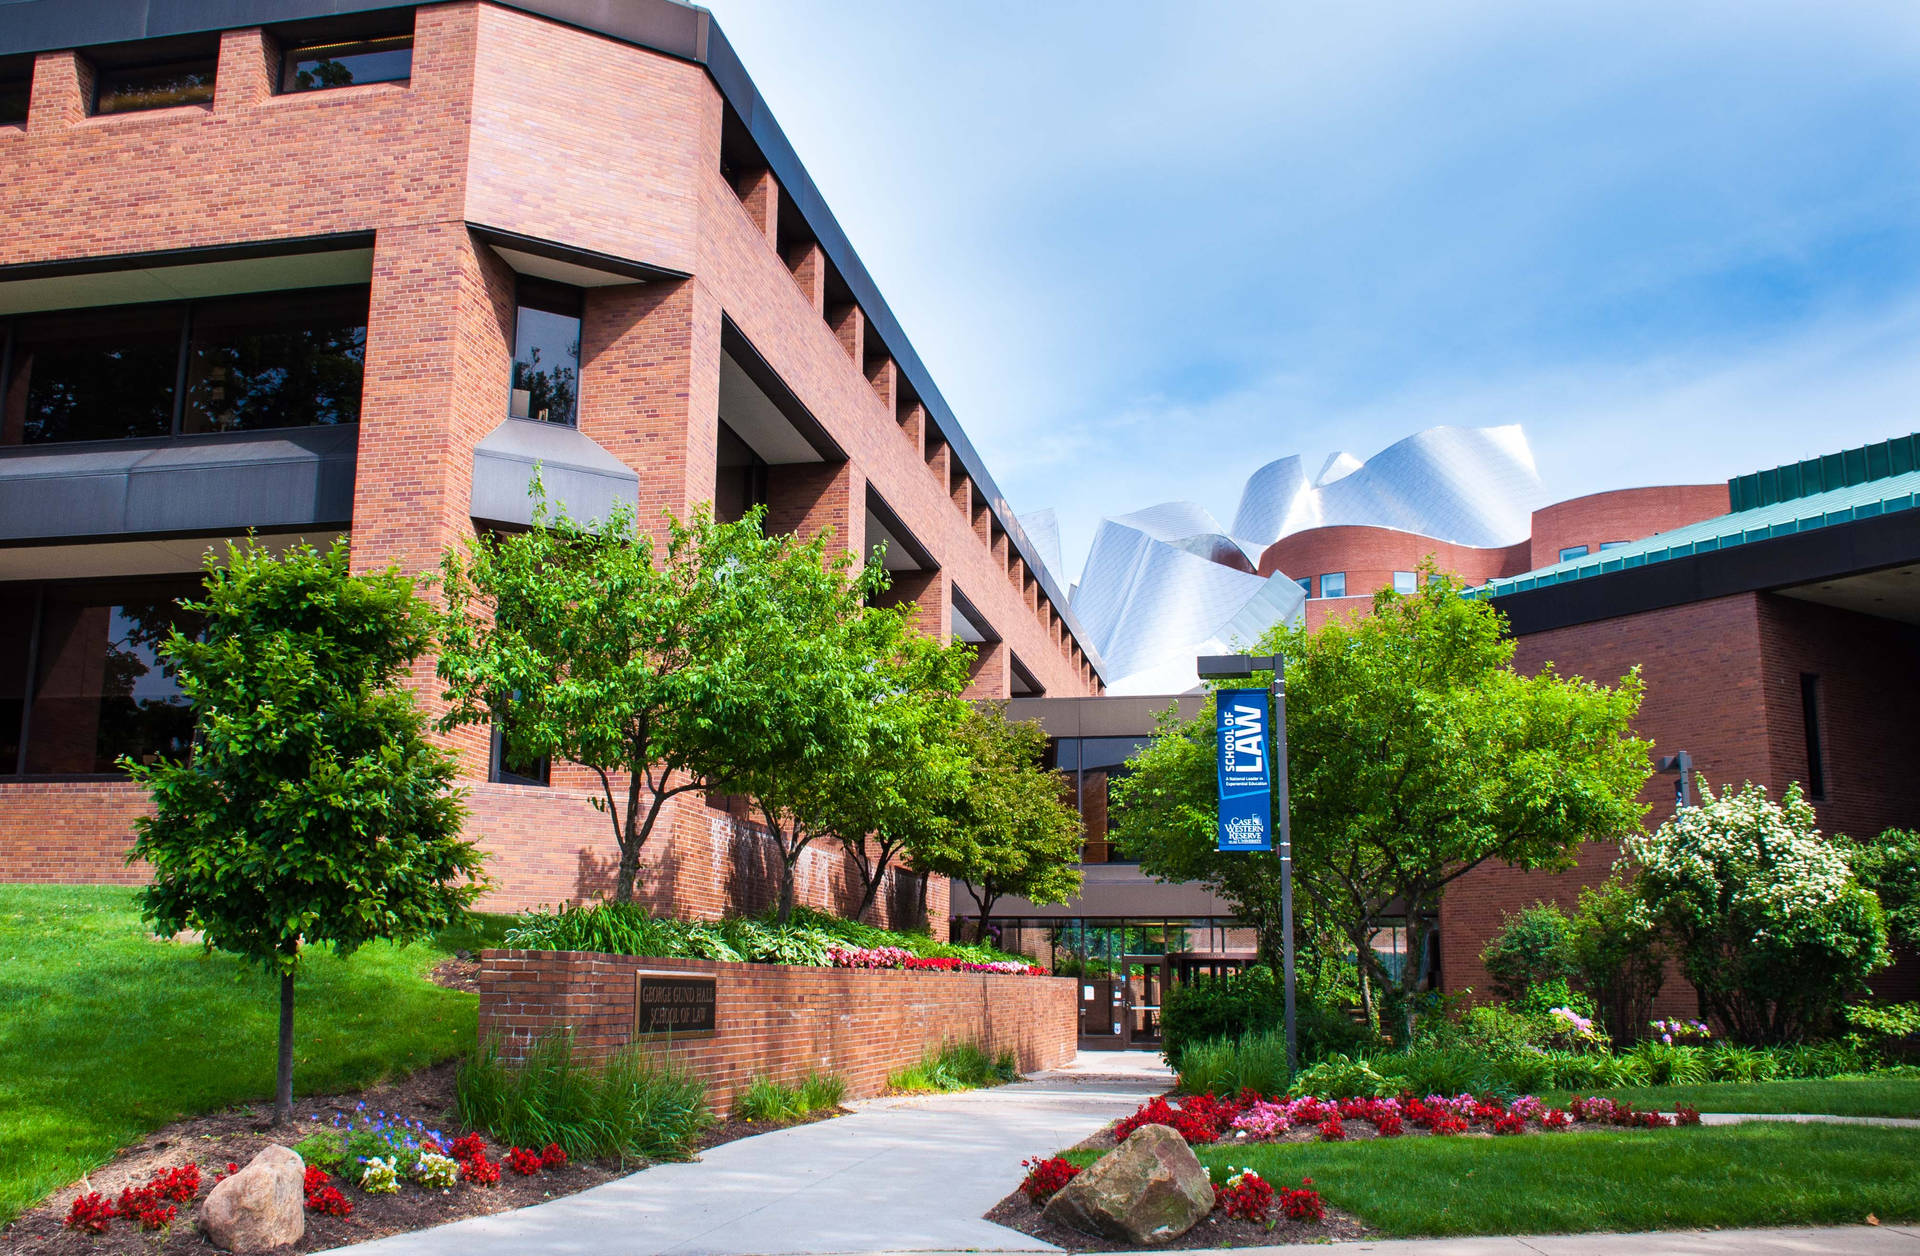 Case Western Reserve University Law School Buildings Background